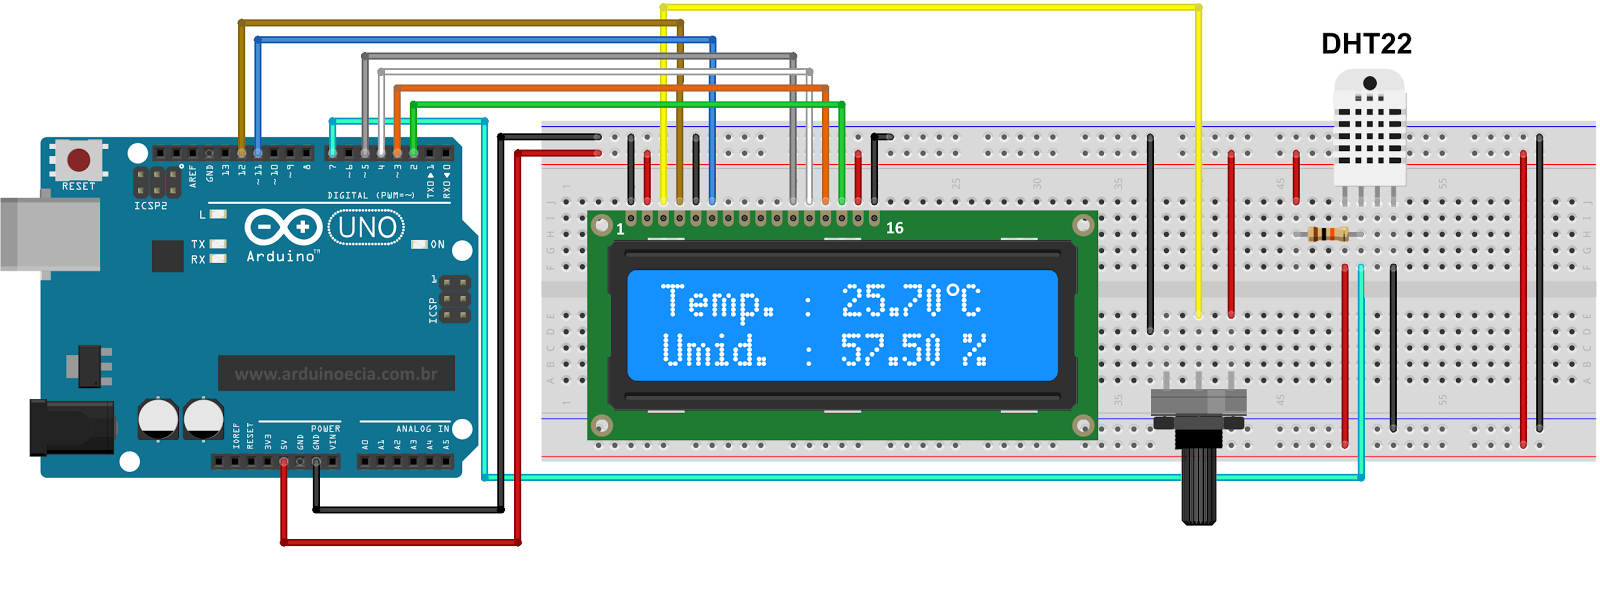 Dht h библиотека. Датчик влажности LCD ардуино. Набор из Arduino uno, датчик DHT-22, макетная плата, OLED дисплей. Ардуино термодатчик ds18b20. Подключить датчик влажности к ардуино.